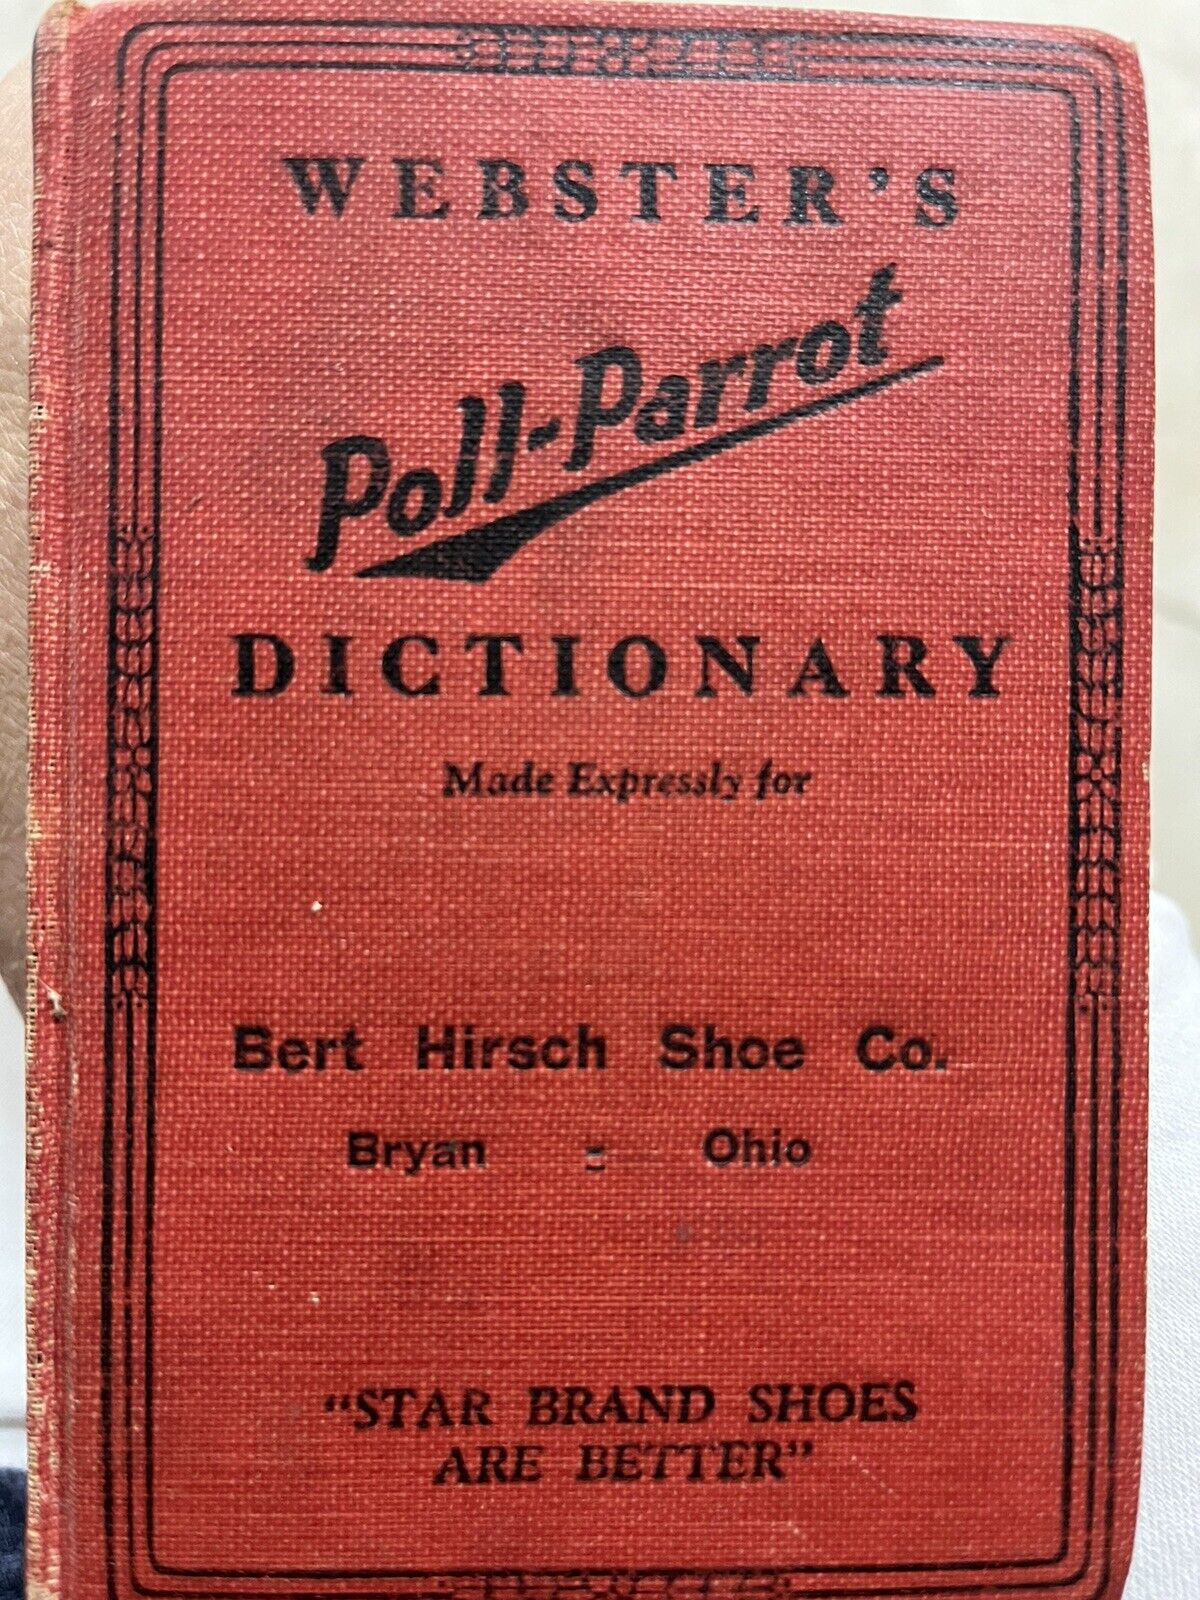 Poll Parrot Dictionary Bryan Ohio Bert Hisrch Shoe Store